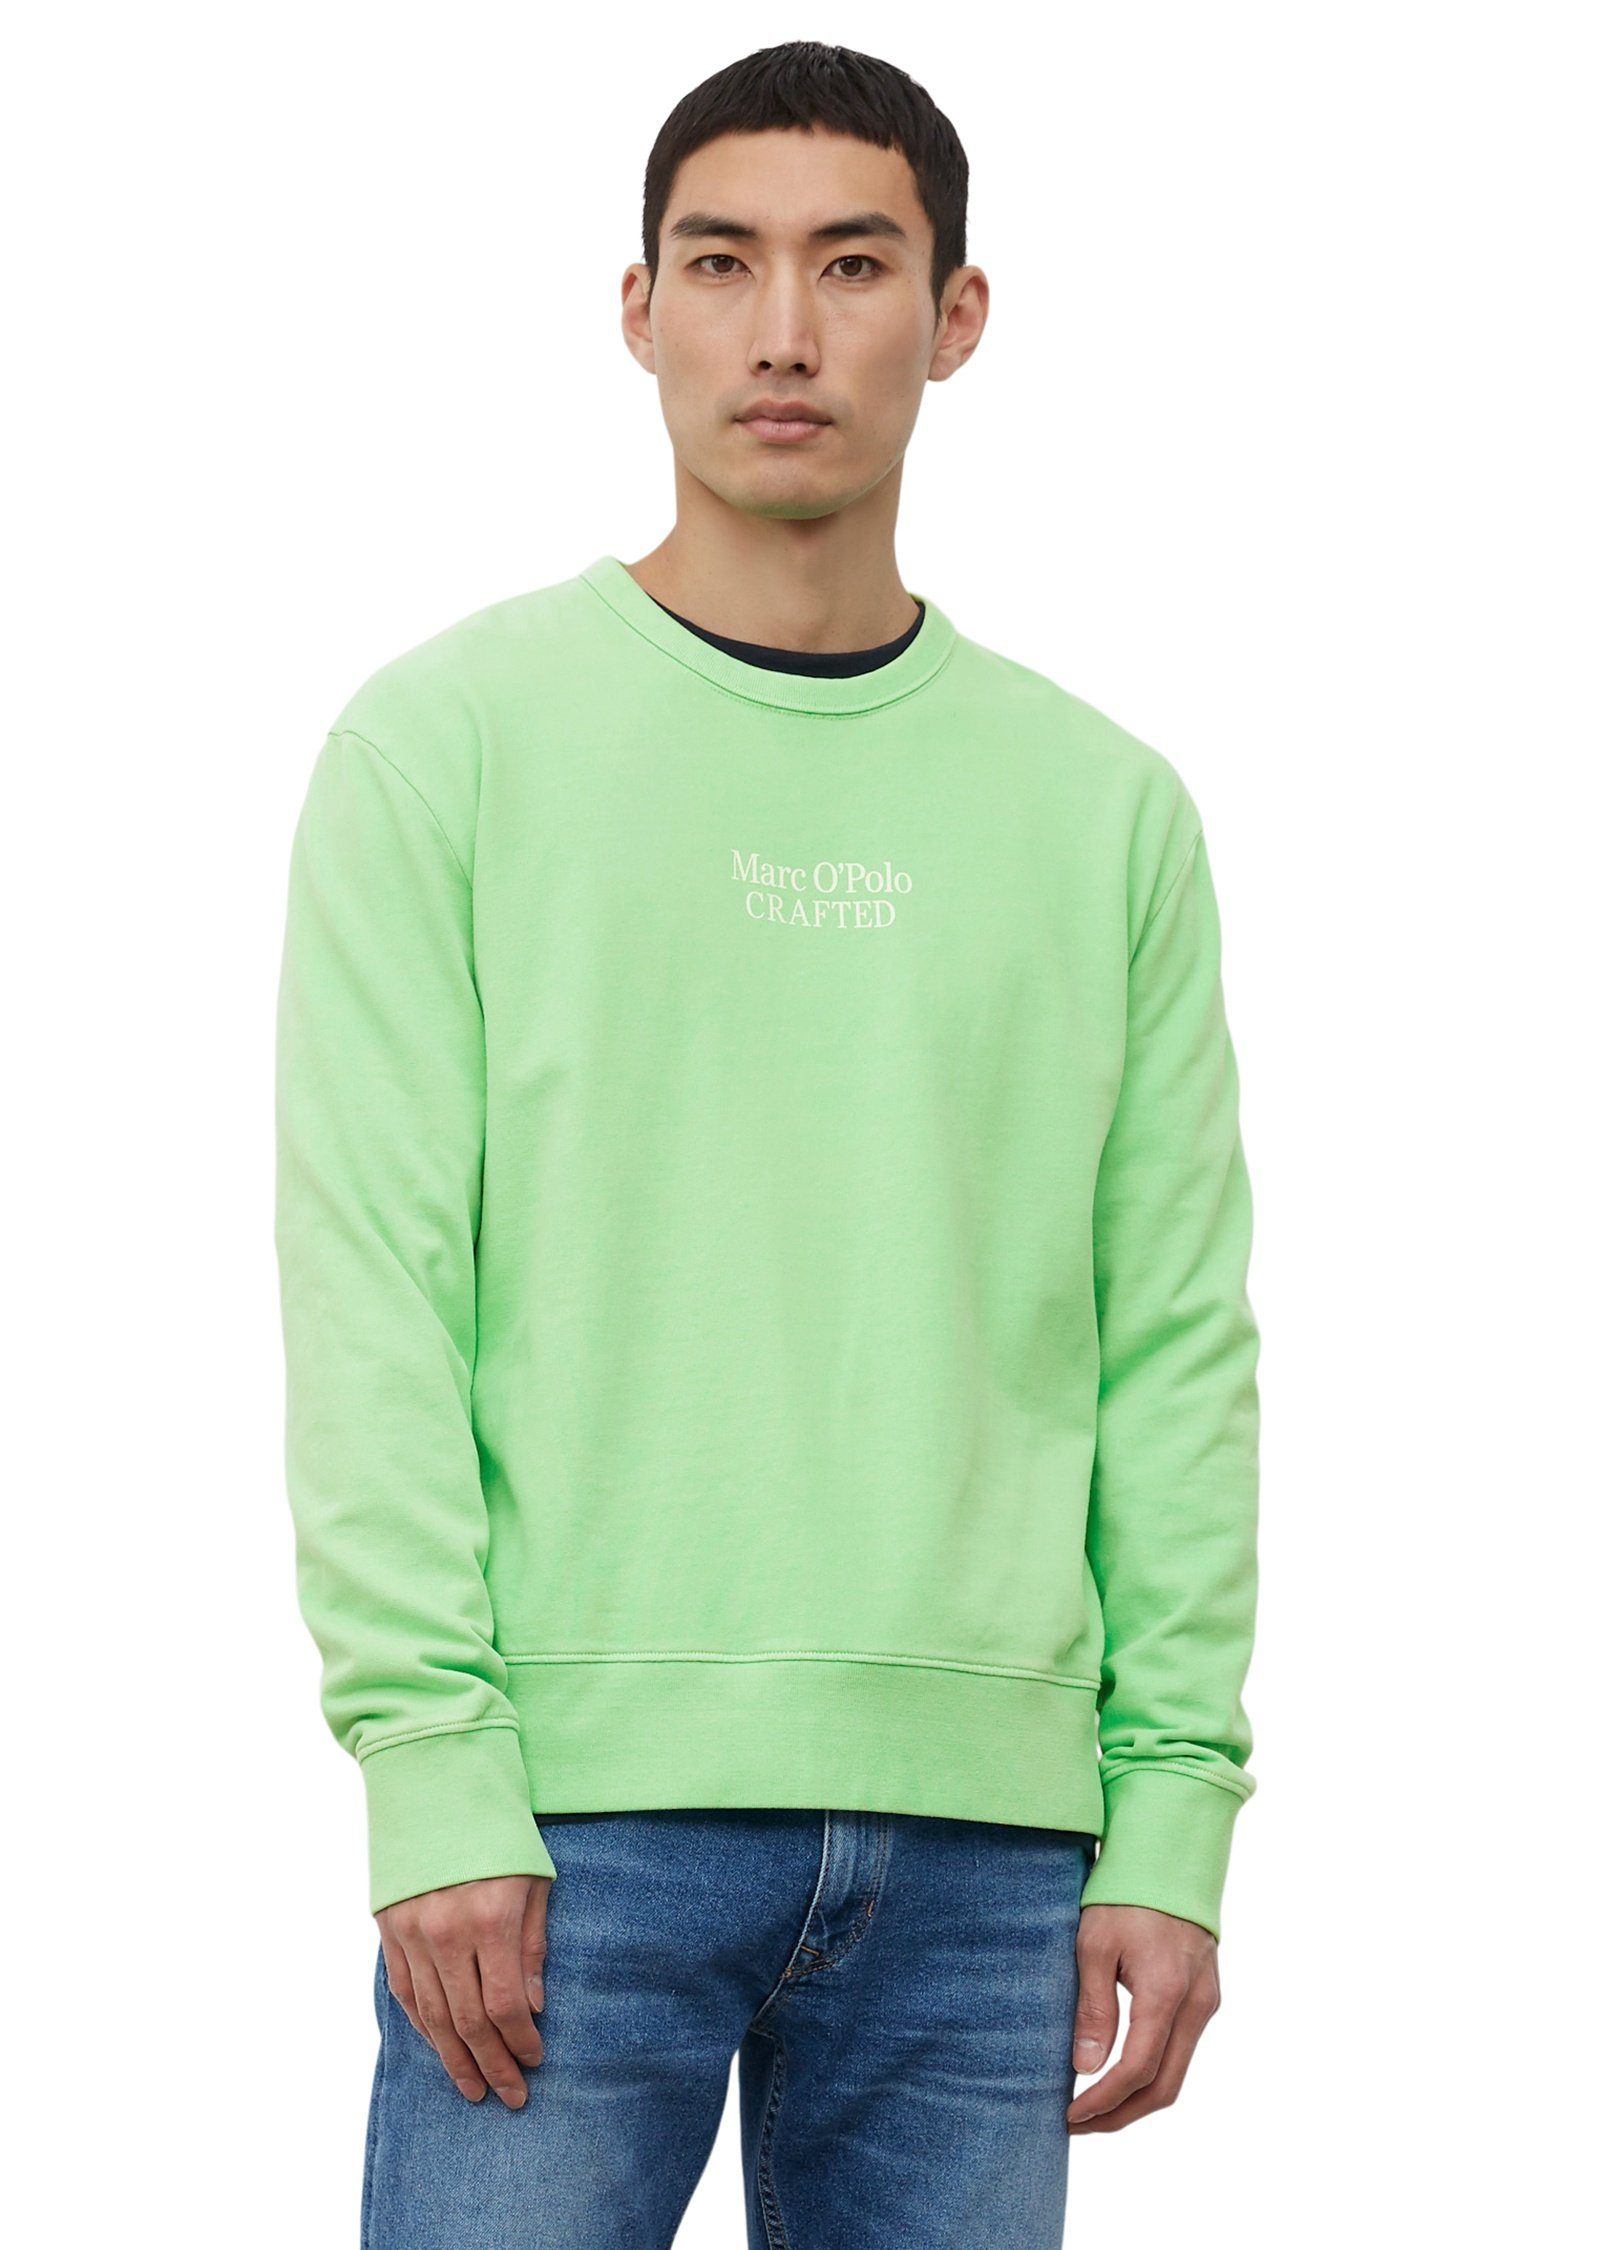 Marc Terry-Sweat-Qualität softer O'Polo grün in Sweatshirt